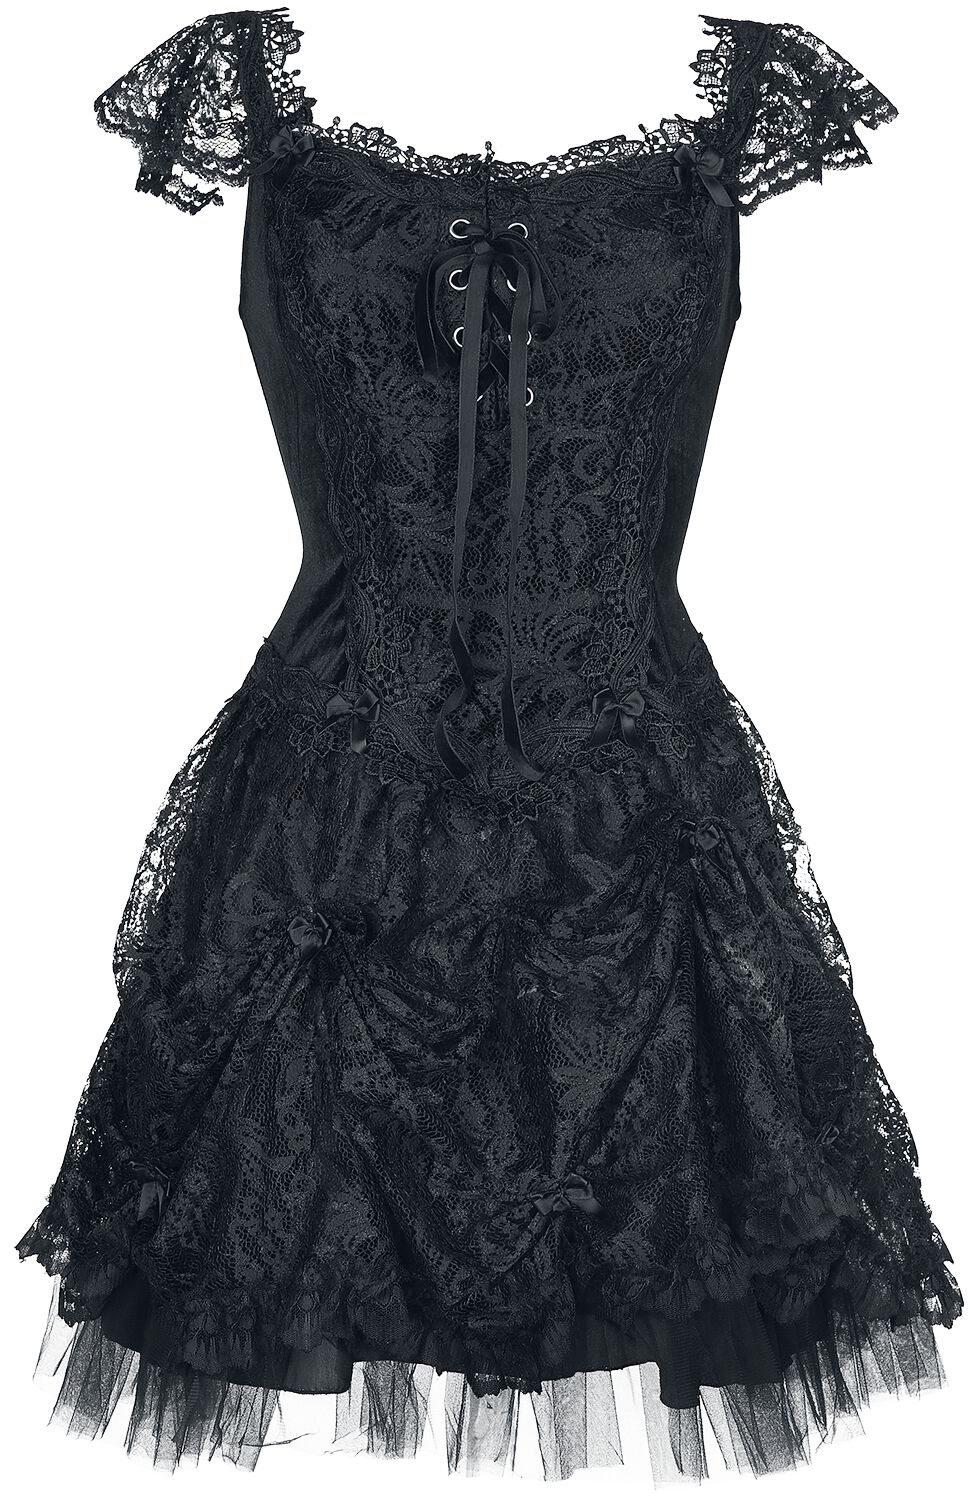 Sinister Gothic Gothic Dress Short dress black